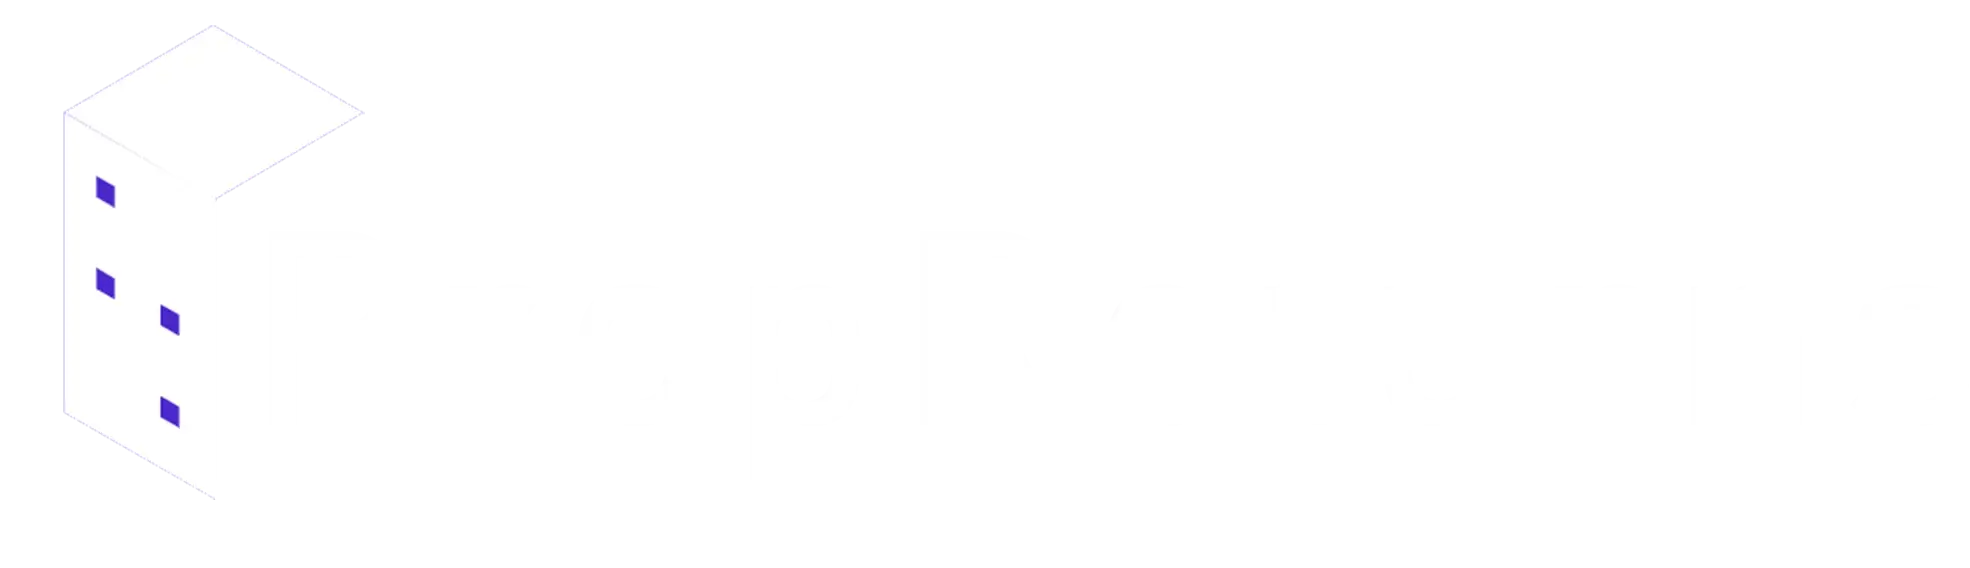 PropReturns logo